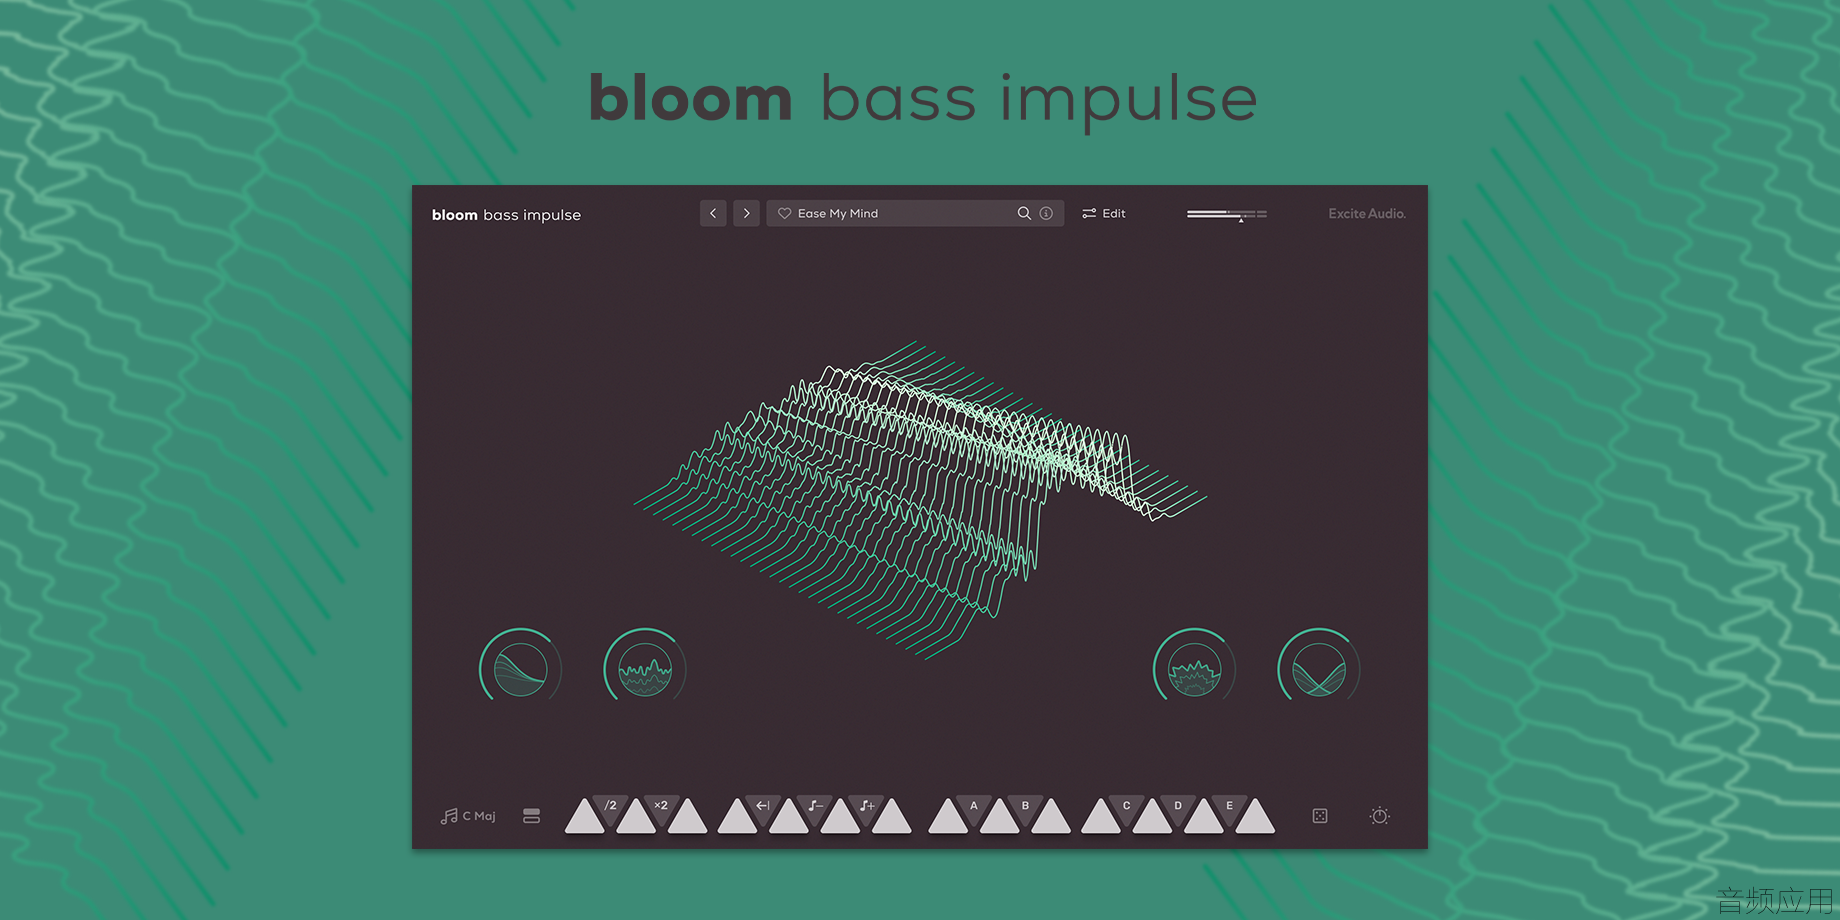 1110695d1712662391-excite-audio-announces-bloom-bass-impulse-unnamed-3-.png